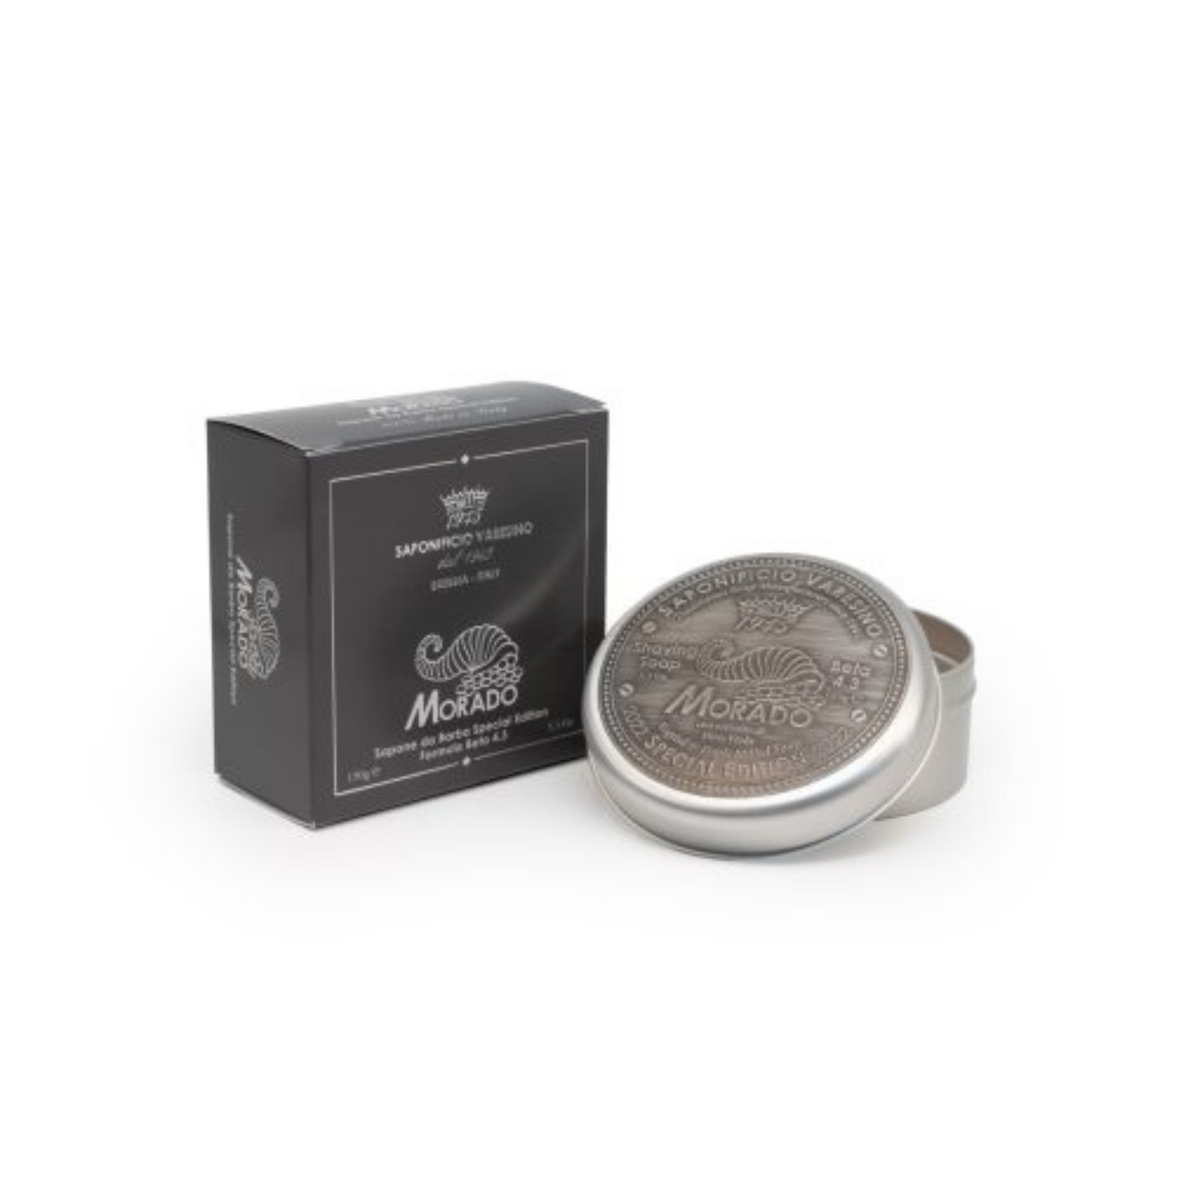 Primary Image of Morado Shaving Soap In Aluminium Jar